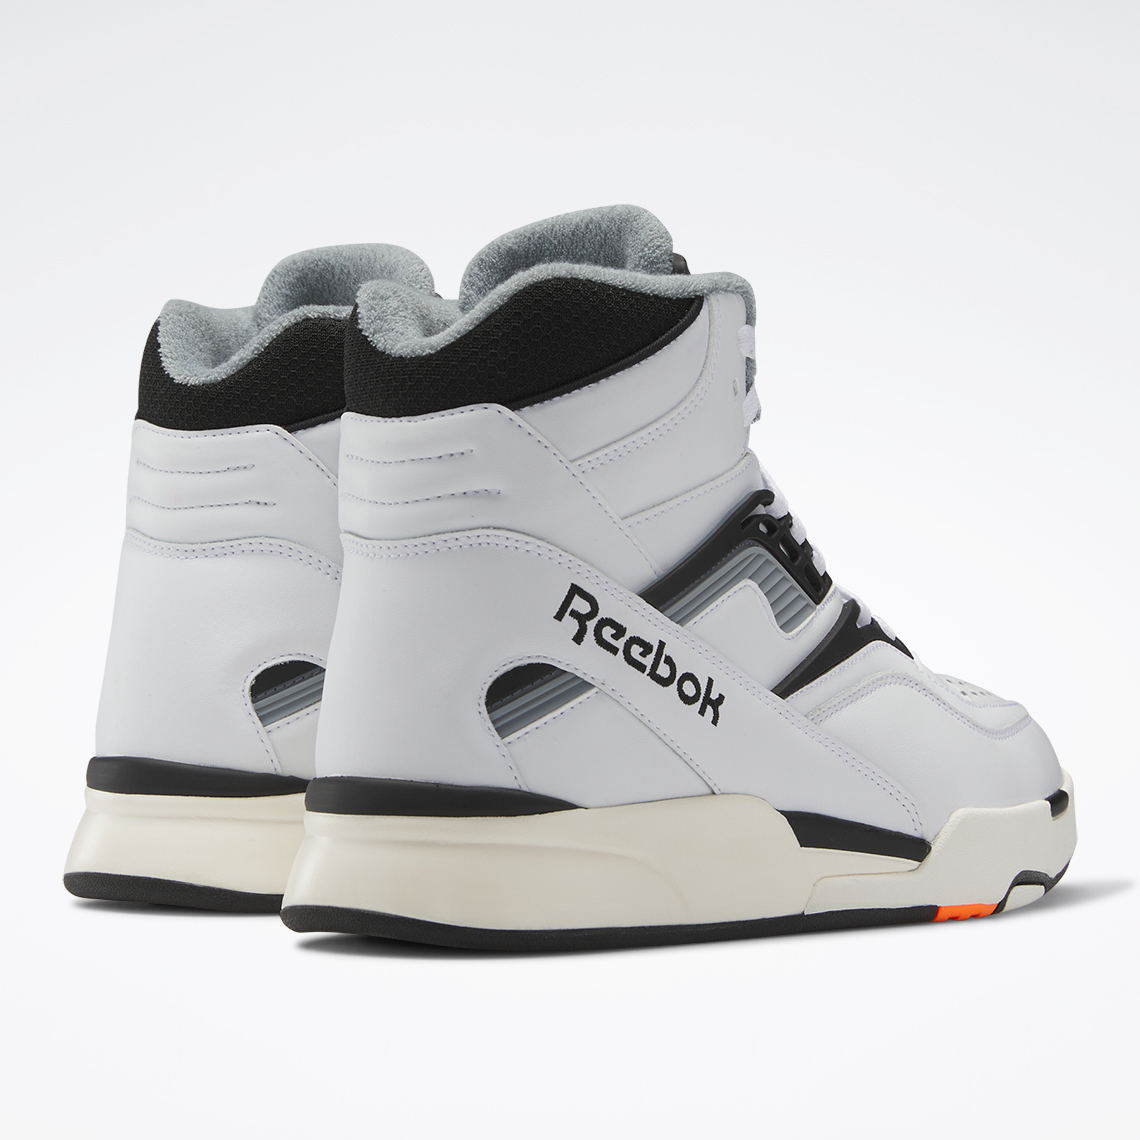 Air Jordan 4 SE "Olympic" Core Black Footwear White Wild Orange Hq8803 1